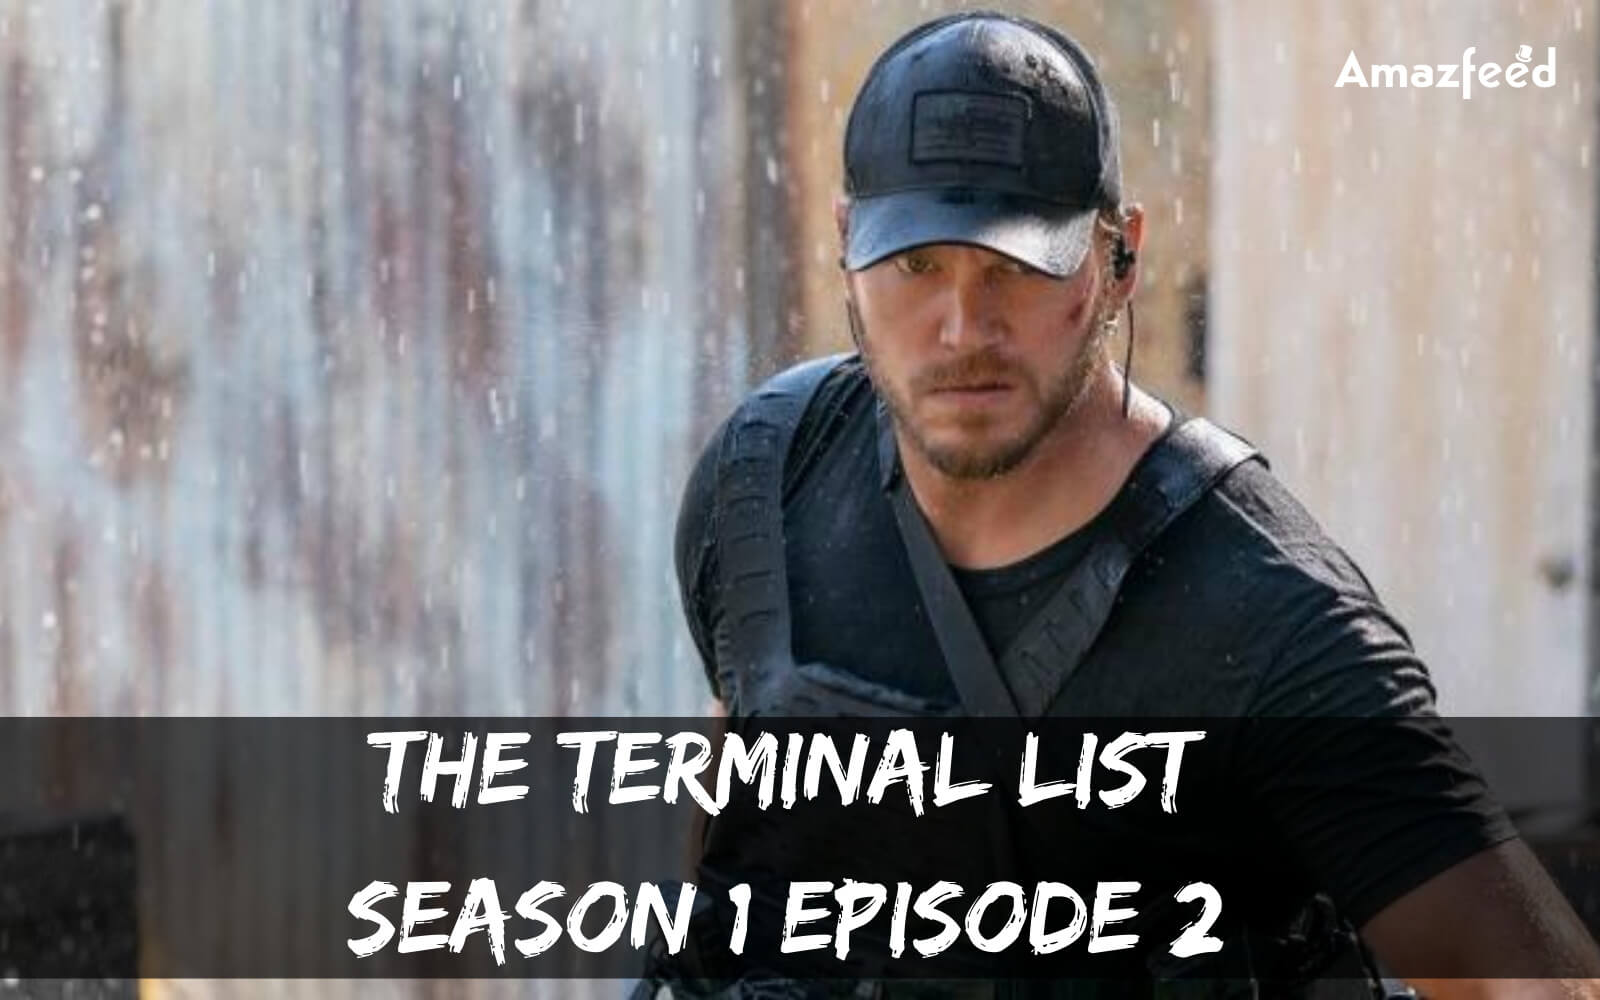 The Terminal List season 1 episode 2 release date